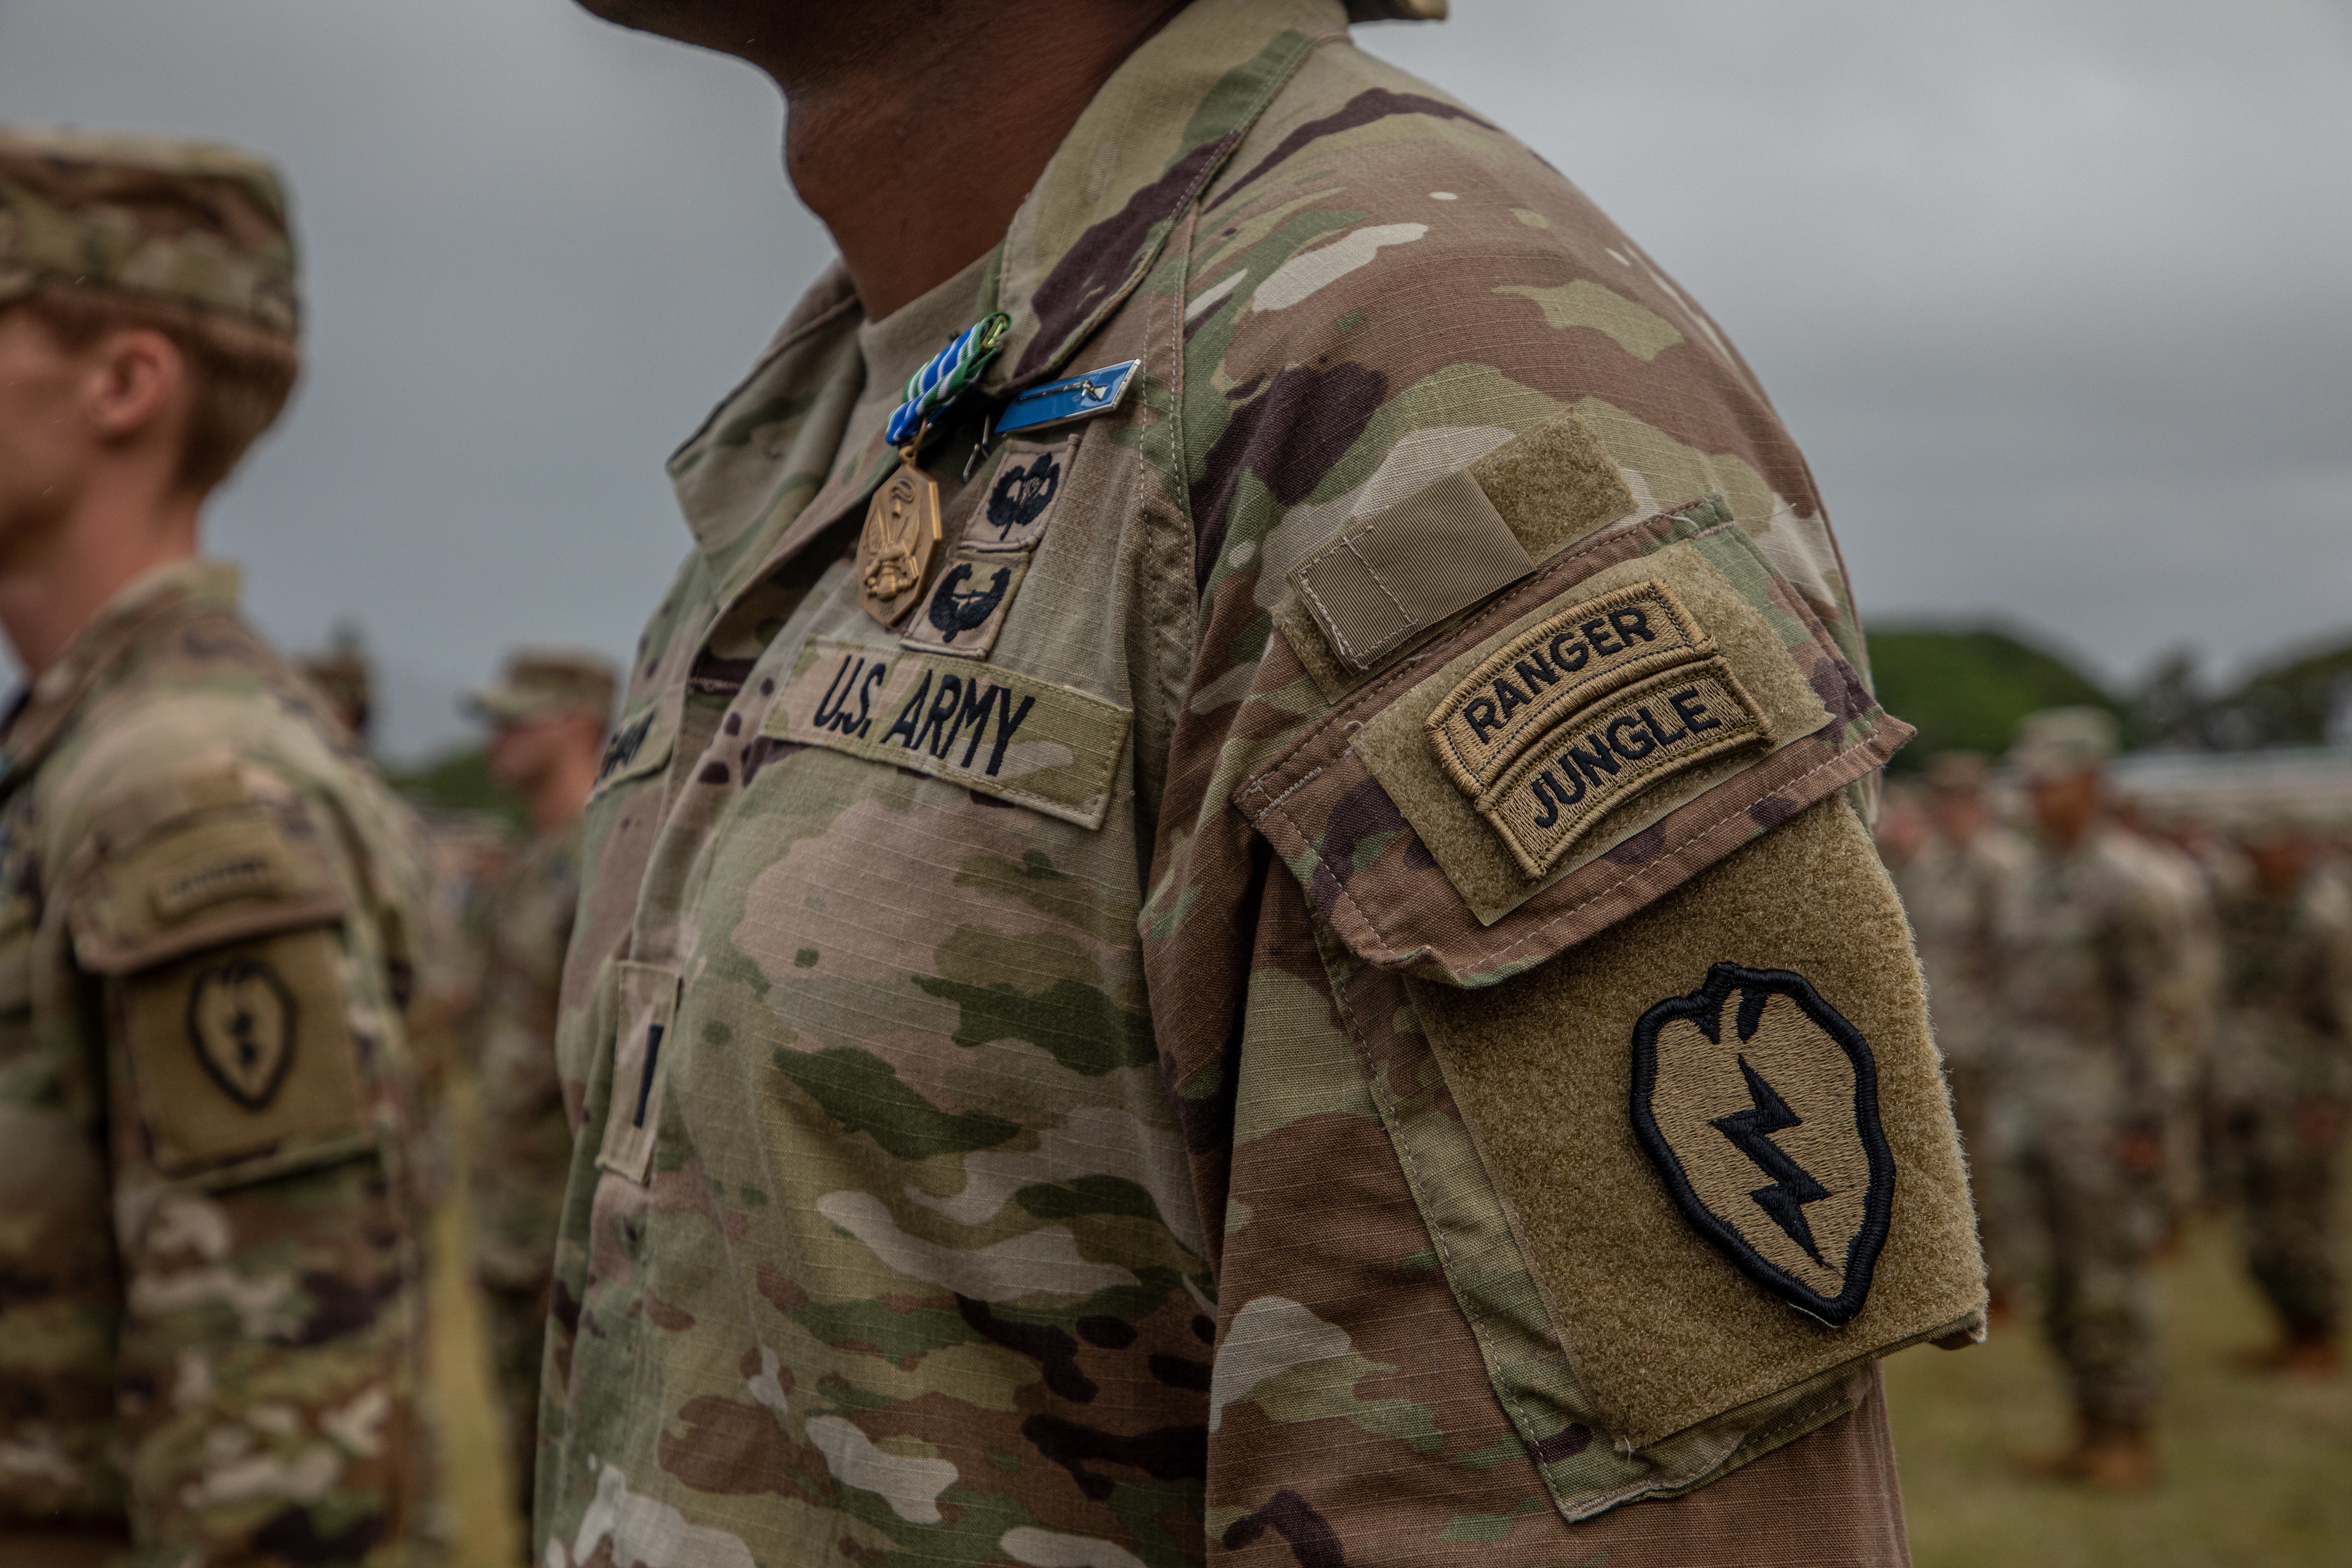 U.S Army Combat Medic Badge Patch NEW!!! 